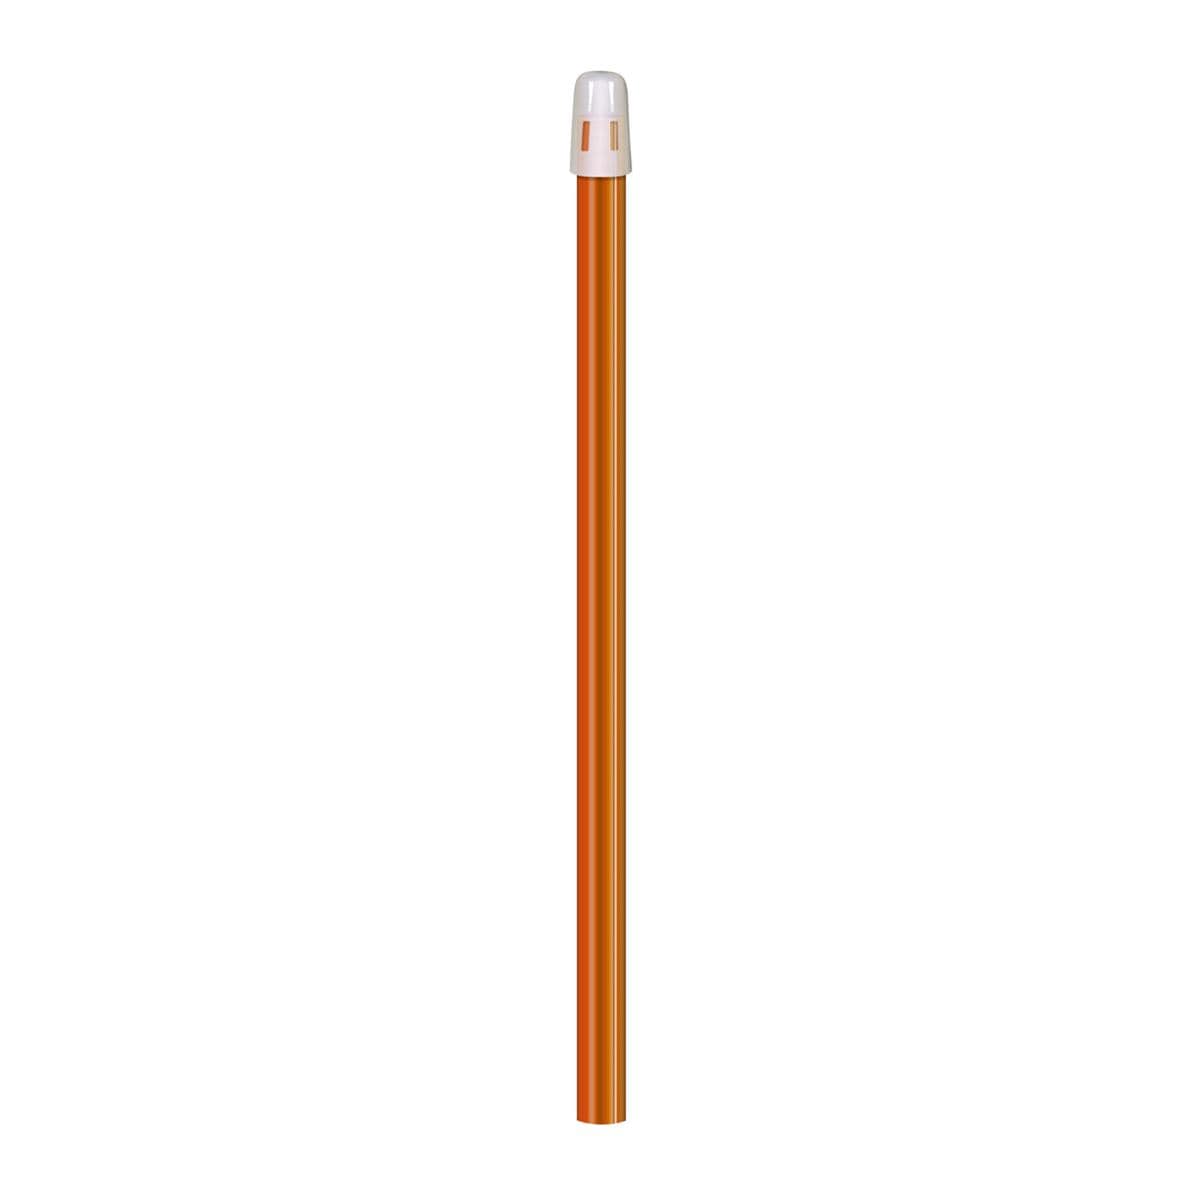 Speekselzuigers met afneembare dop (13 cm) - Oranje, 100 stuks